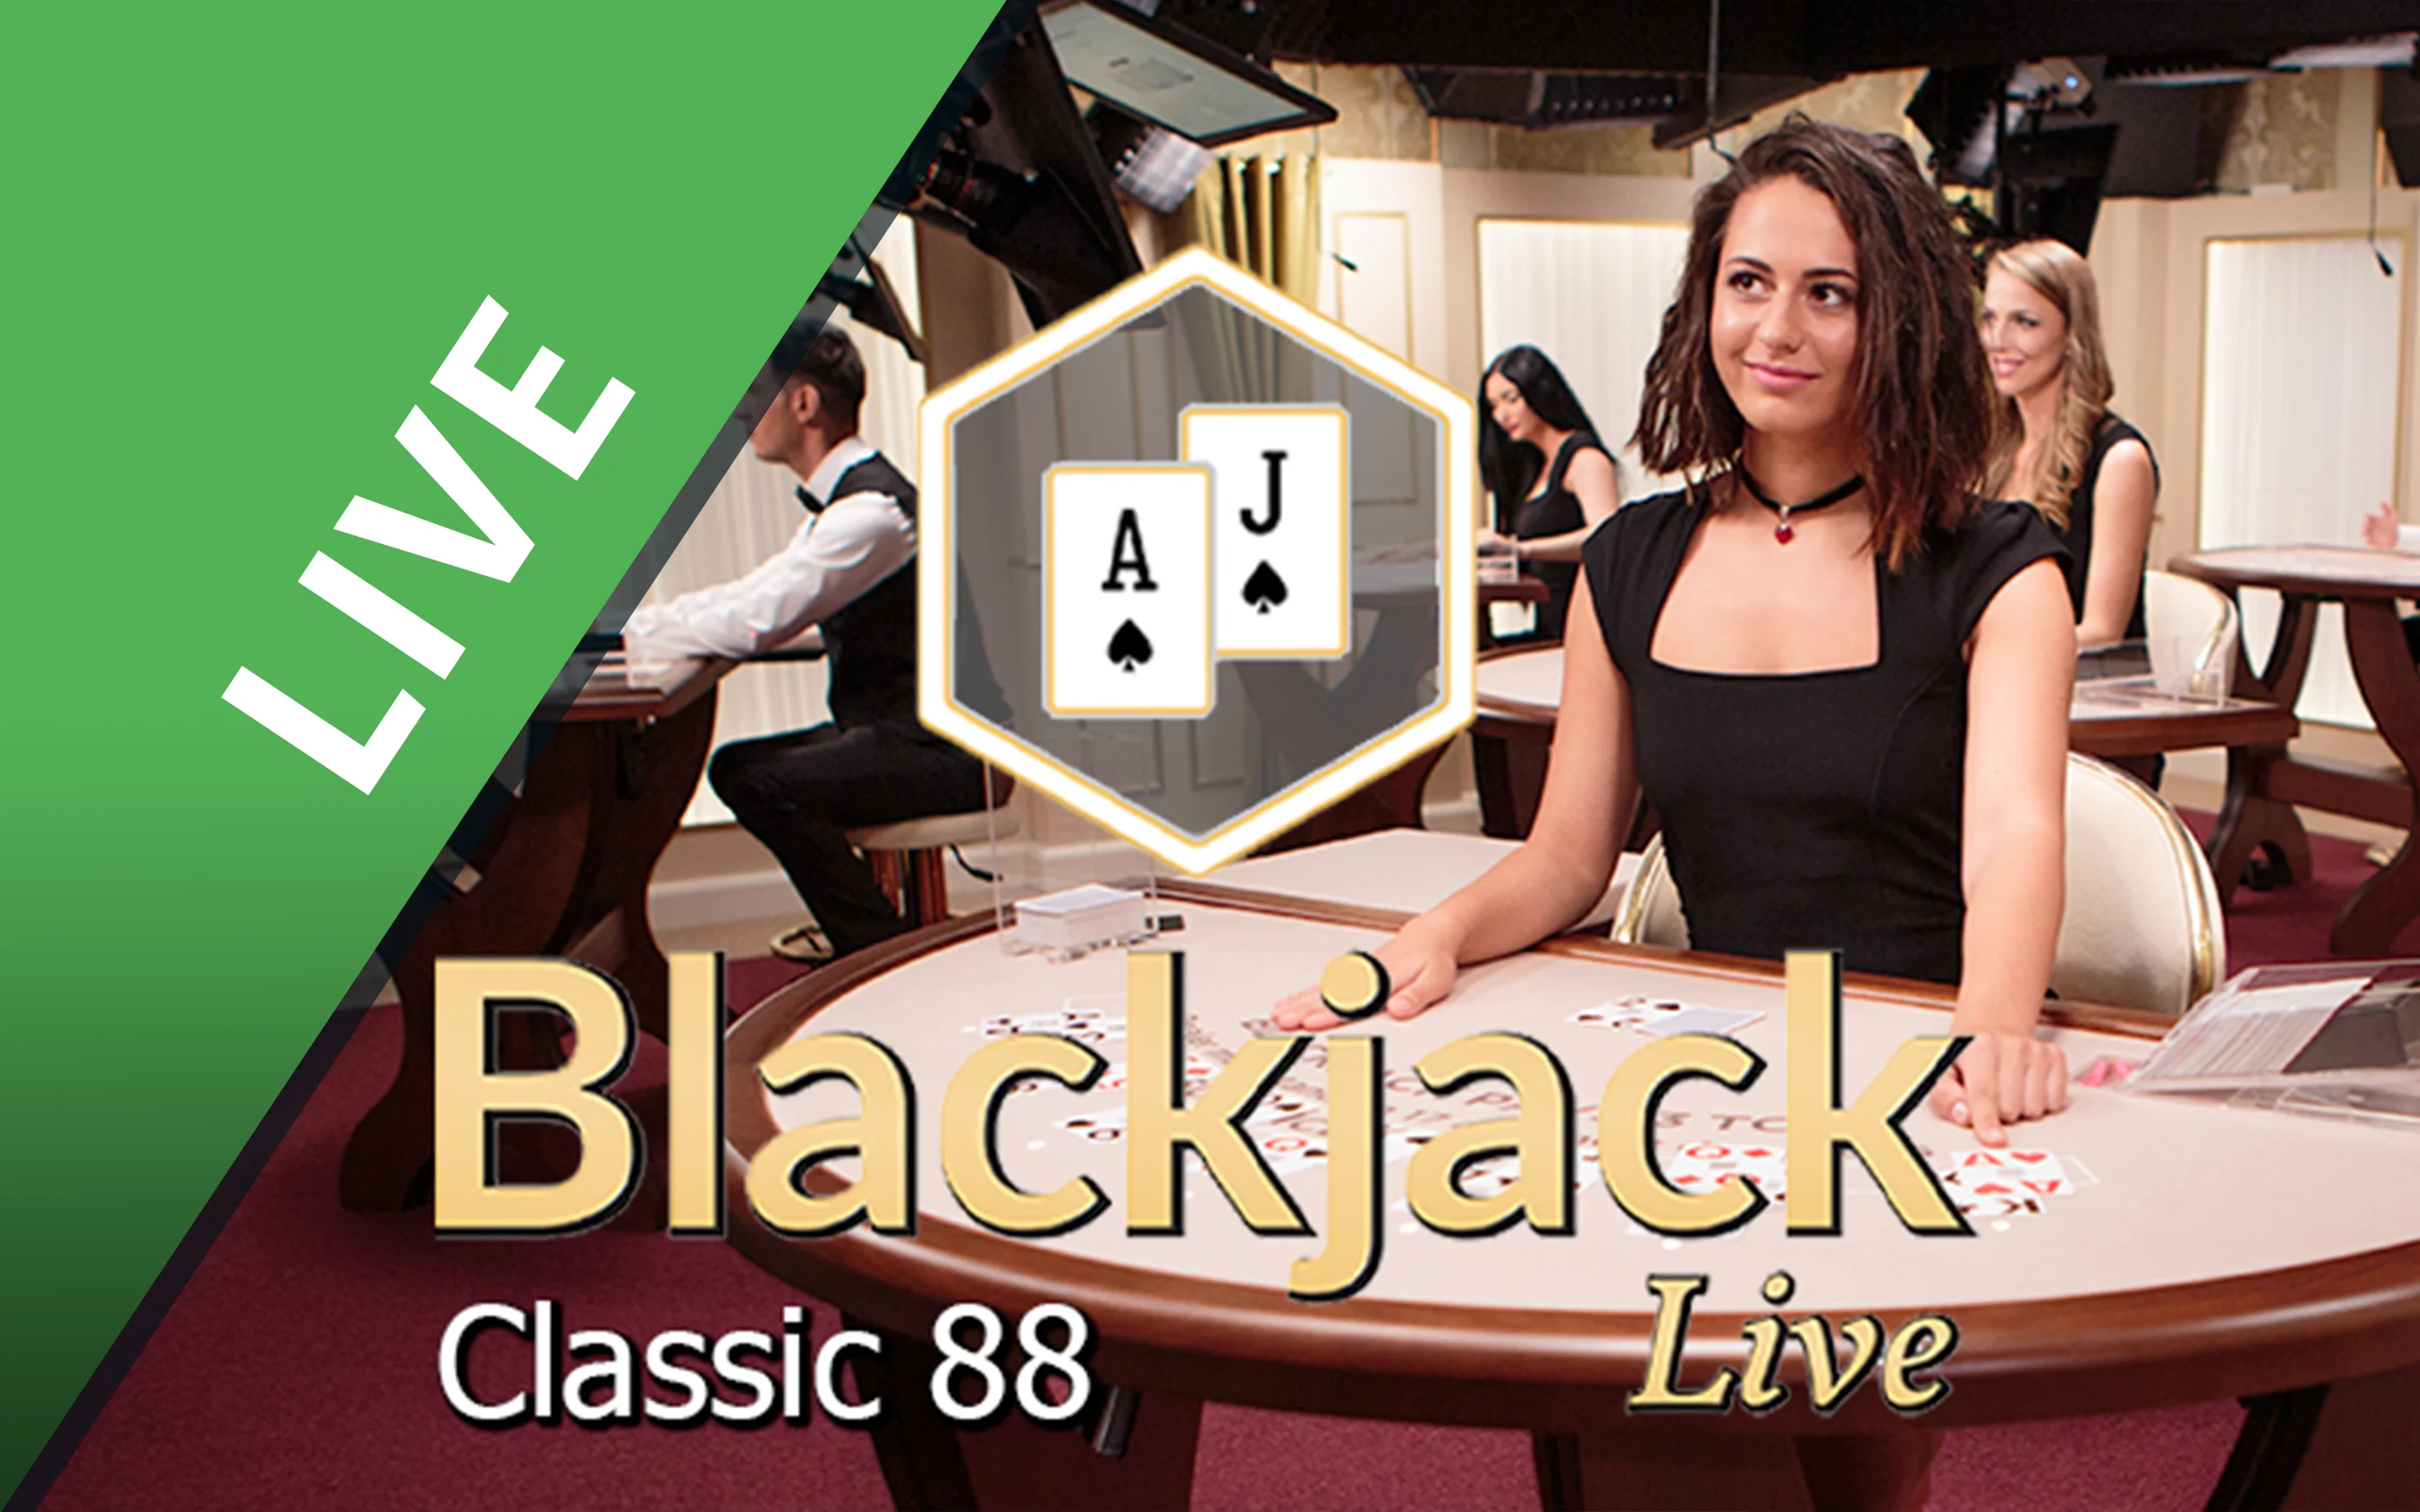 Play Blackjack Classic 88 on Starcasino.be online casino